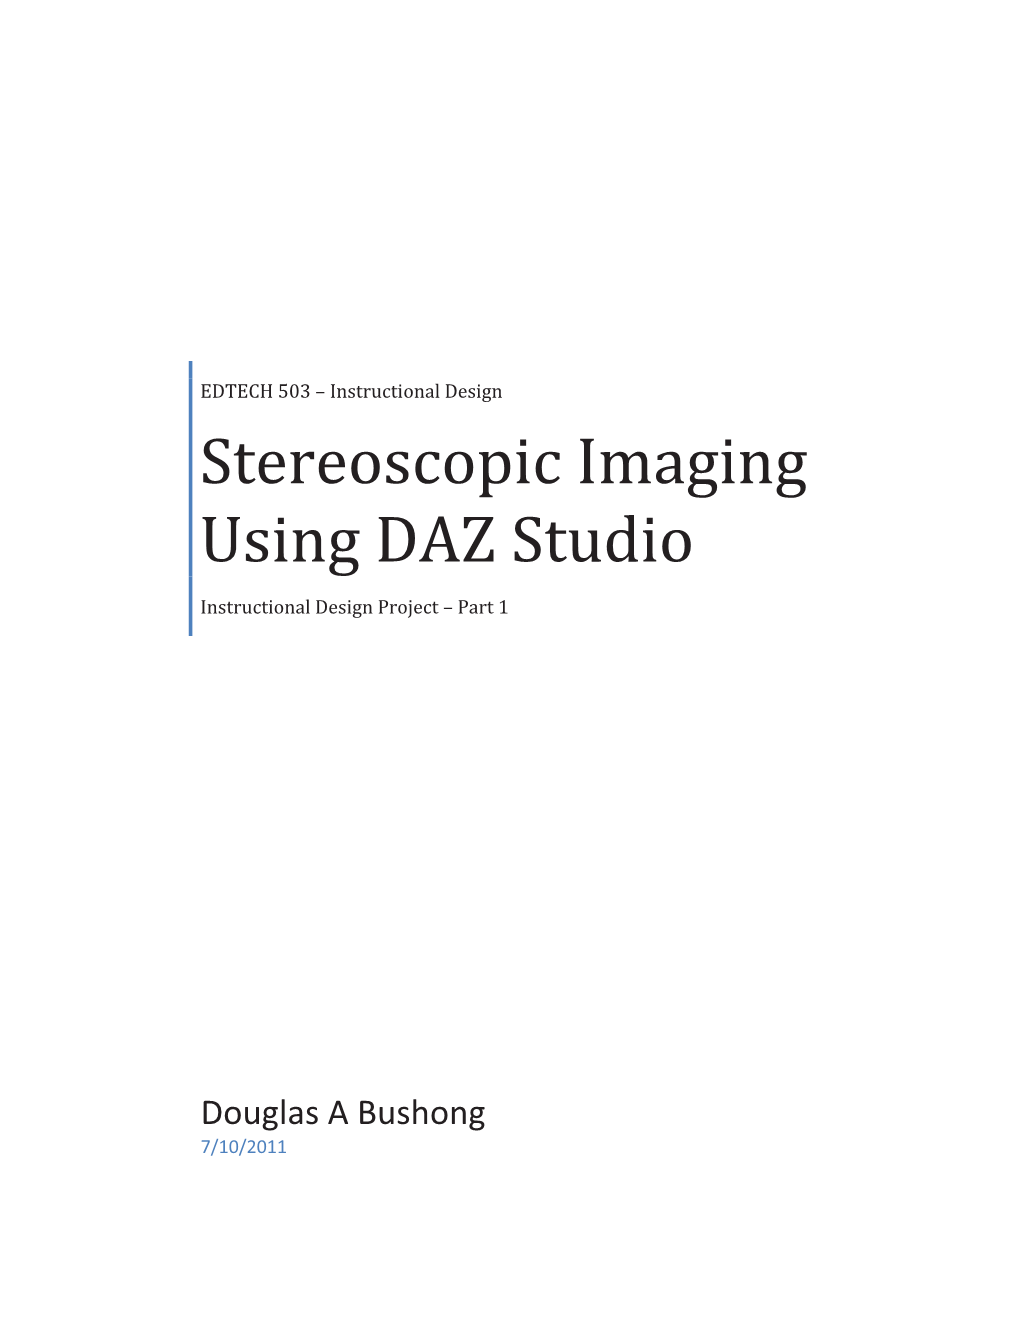 Stereoscopic Imaging Using DAZ Studio